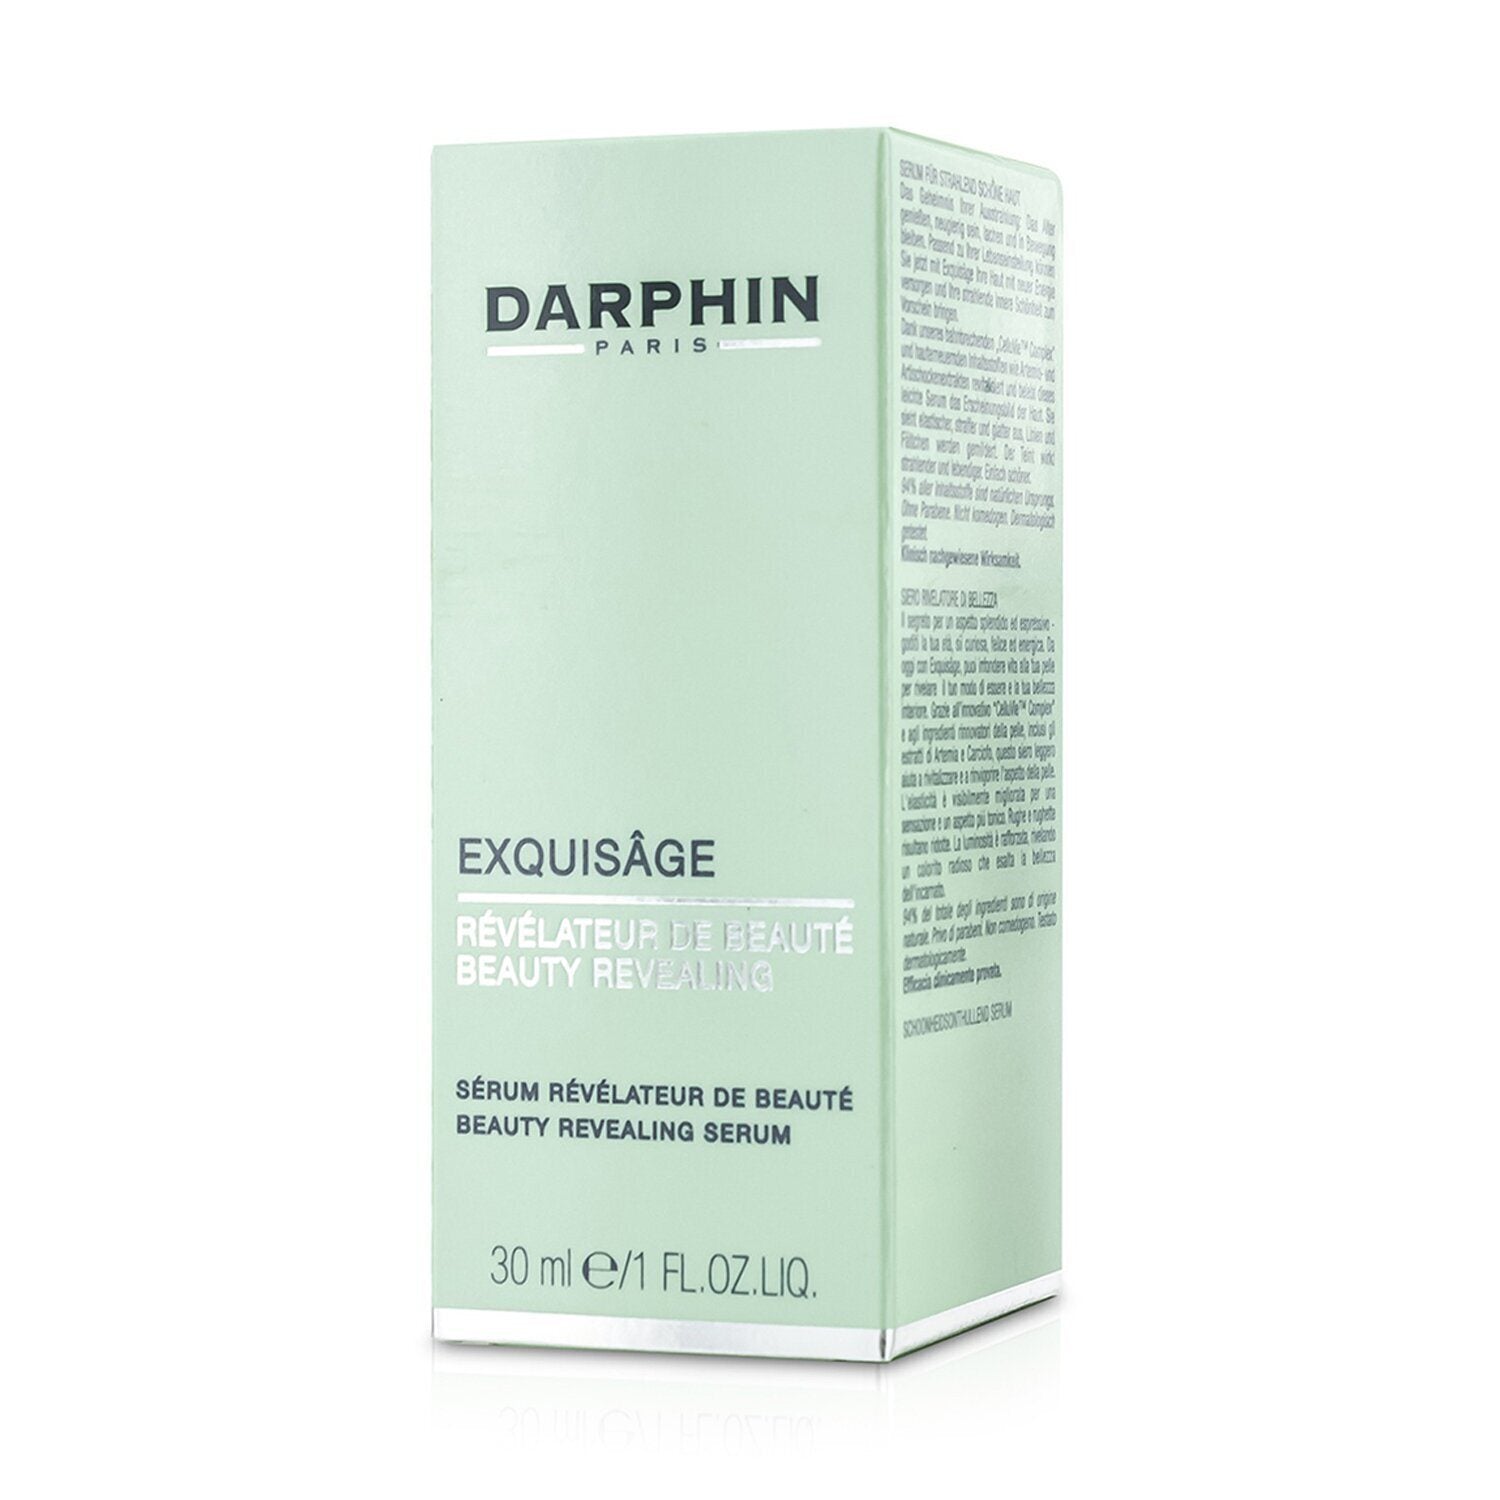 Darphin - Exquisage Beauty Revealing Serum - 30ml/1oz 3P's Inclusive Beauty